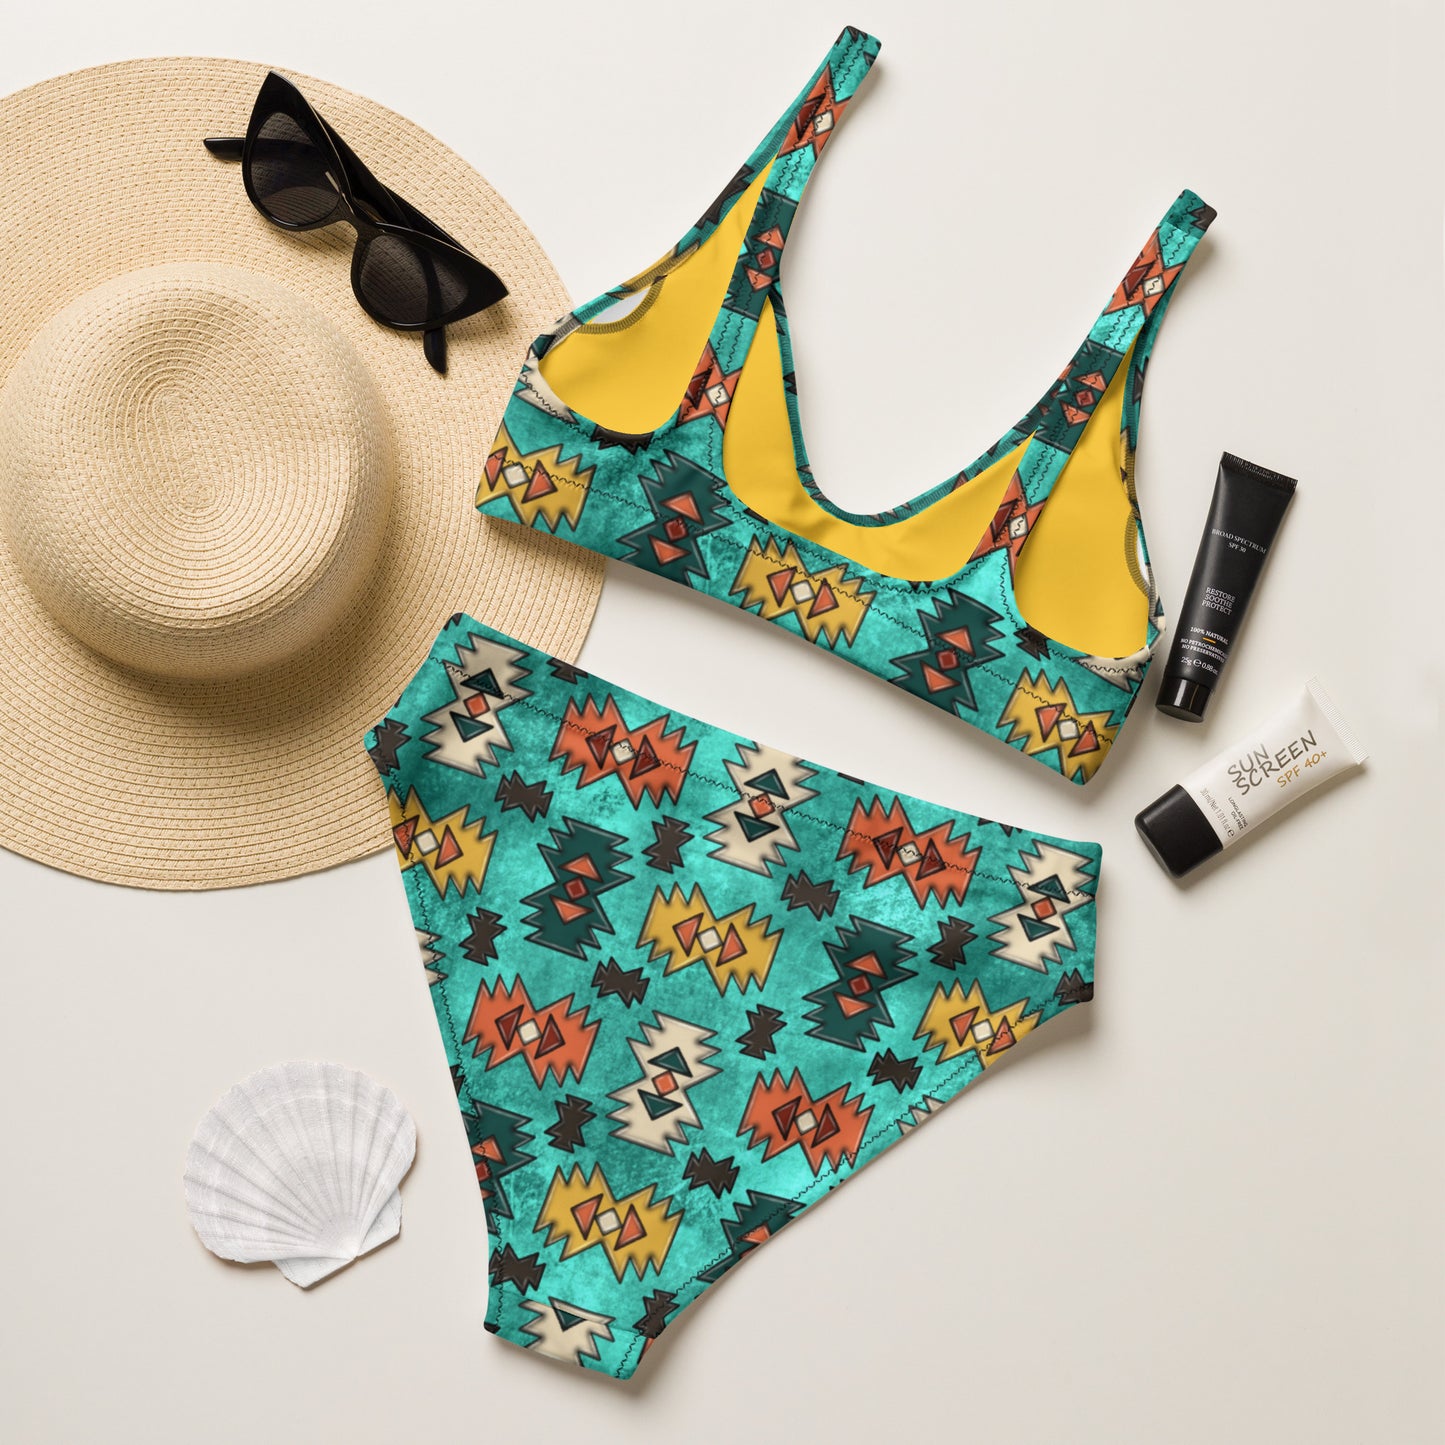 READY TO SHIP Yeehaw Turquoise Aztec Bikini SIZE MEDIUM